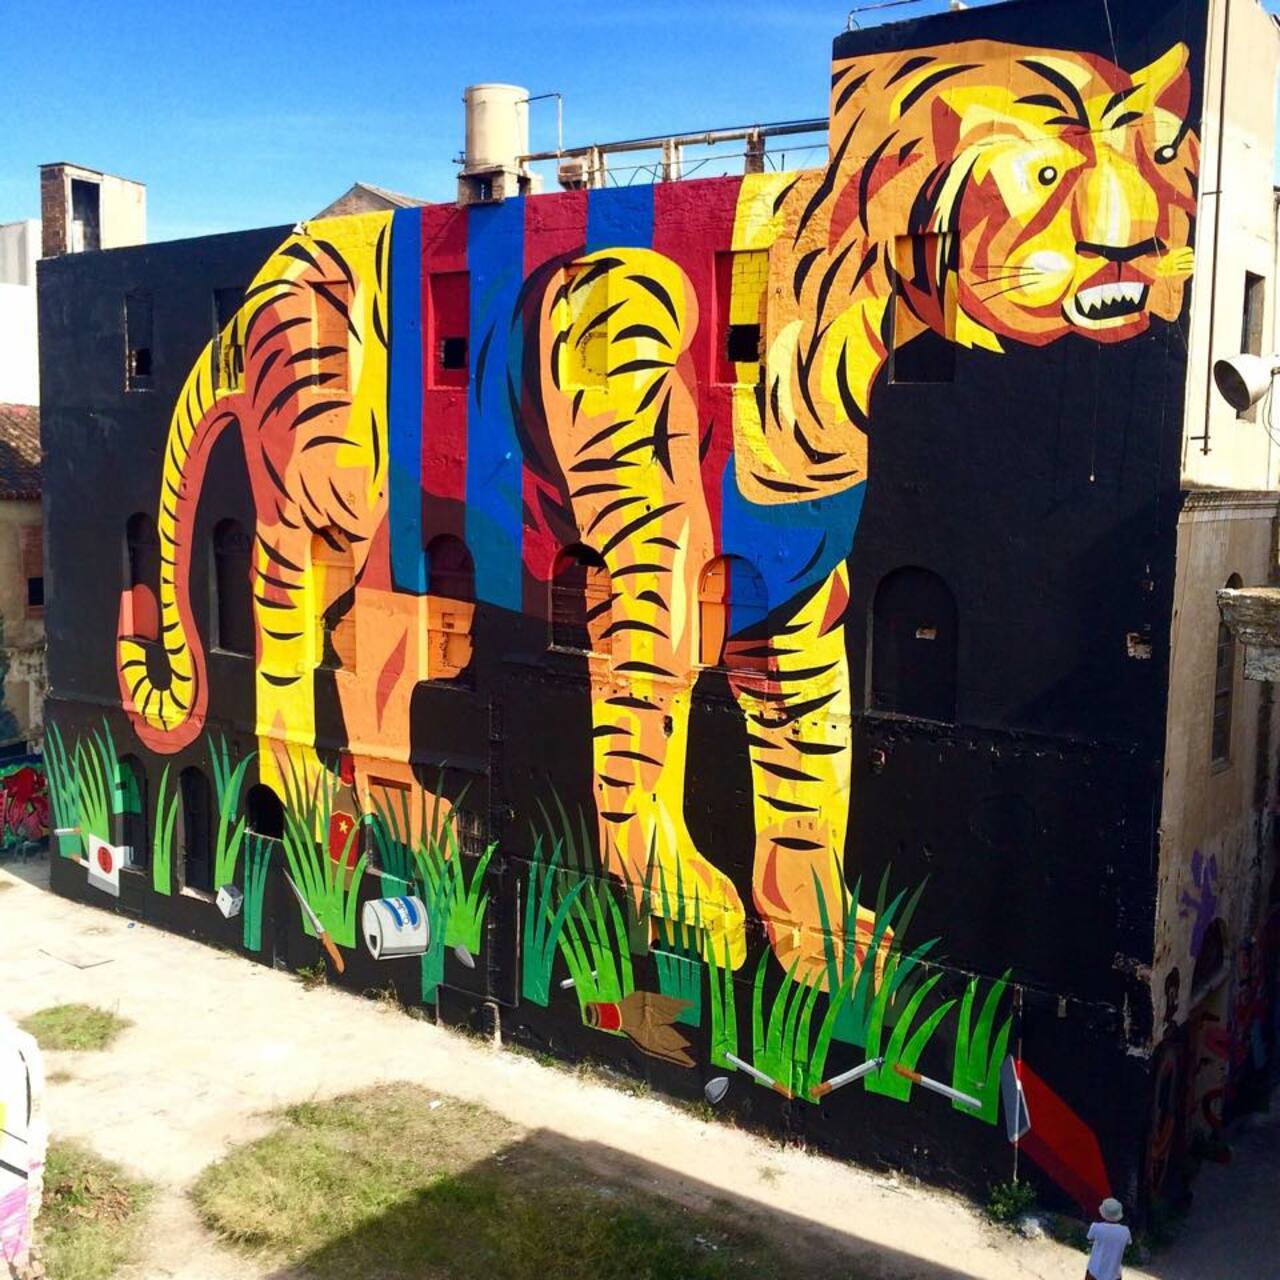 Franco Fasoli 'JAZ' paints a new mural in Barcelona, Spain. #StreetArt #Graffiti #Mural http://t.co/DwrEOlSo8B